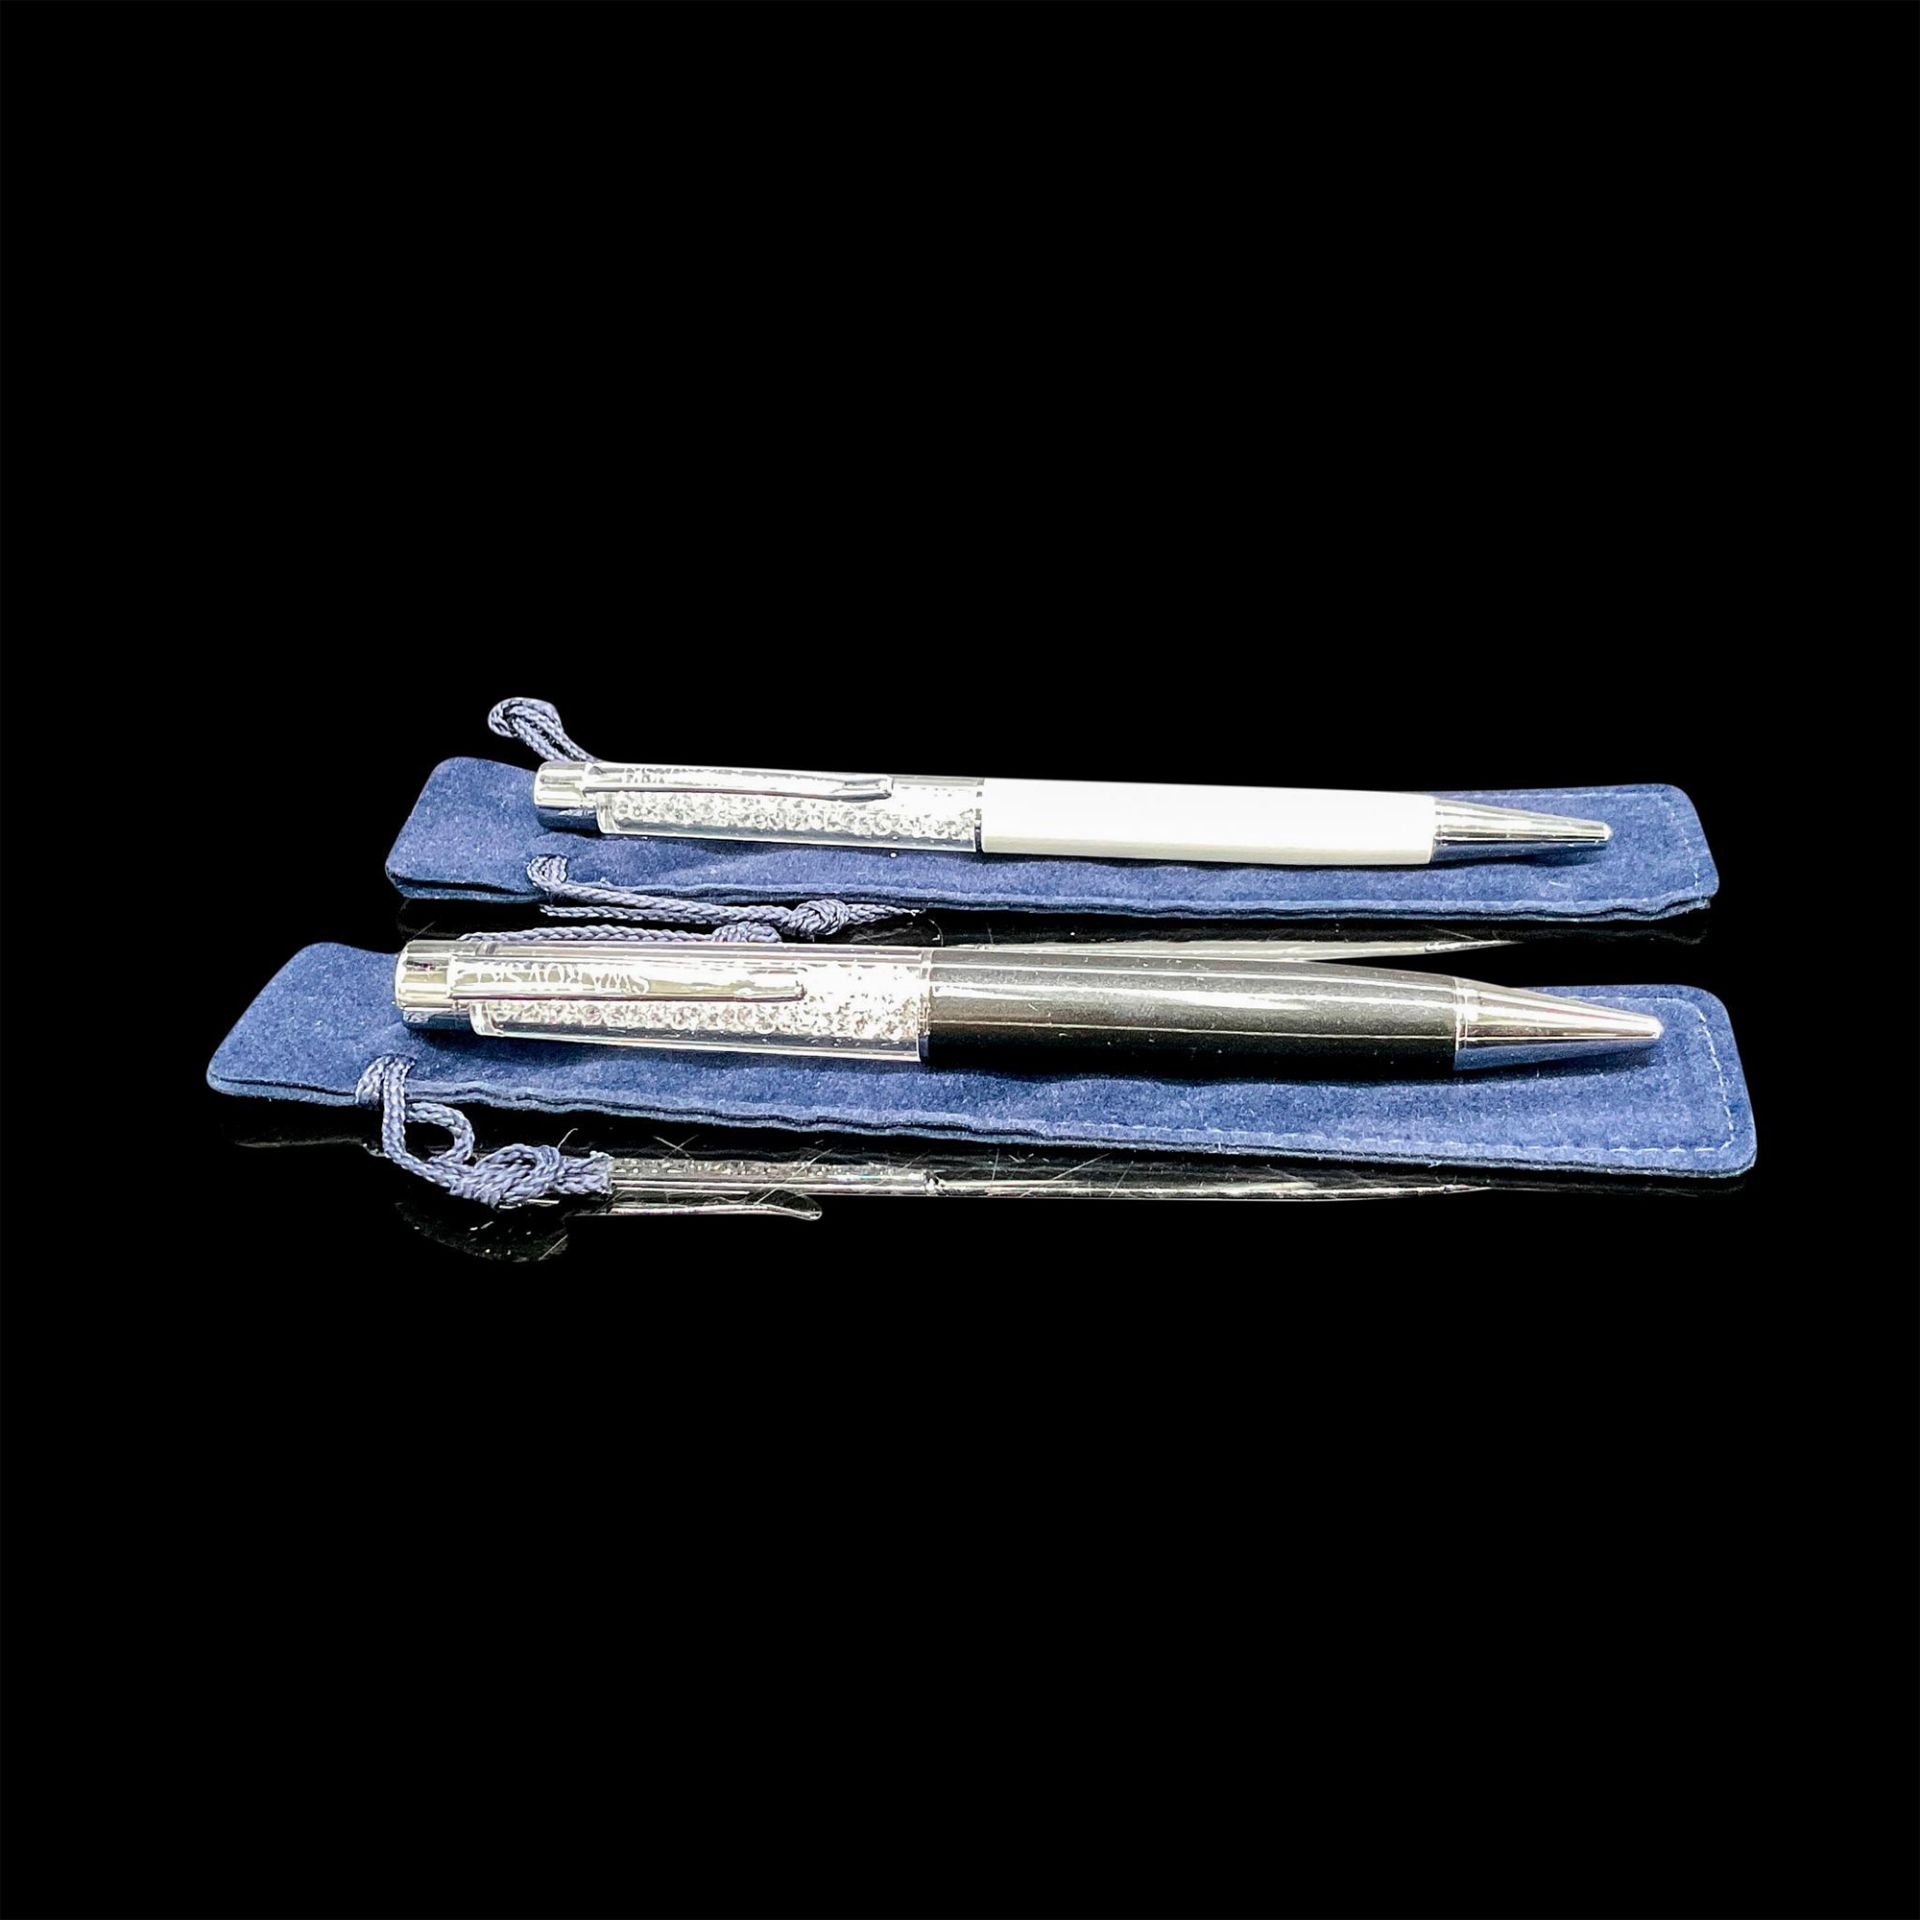 Swarovski Crystal Pen and Pencil Set - Image 2 of 2